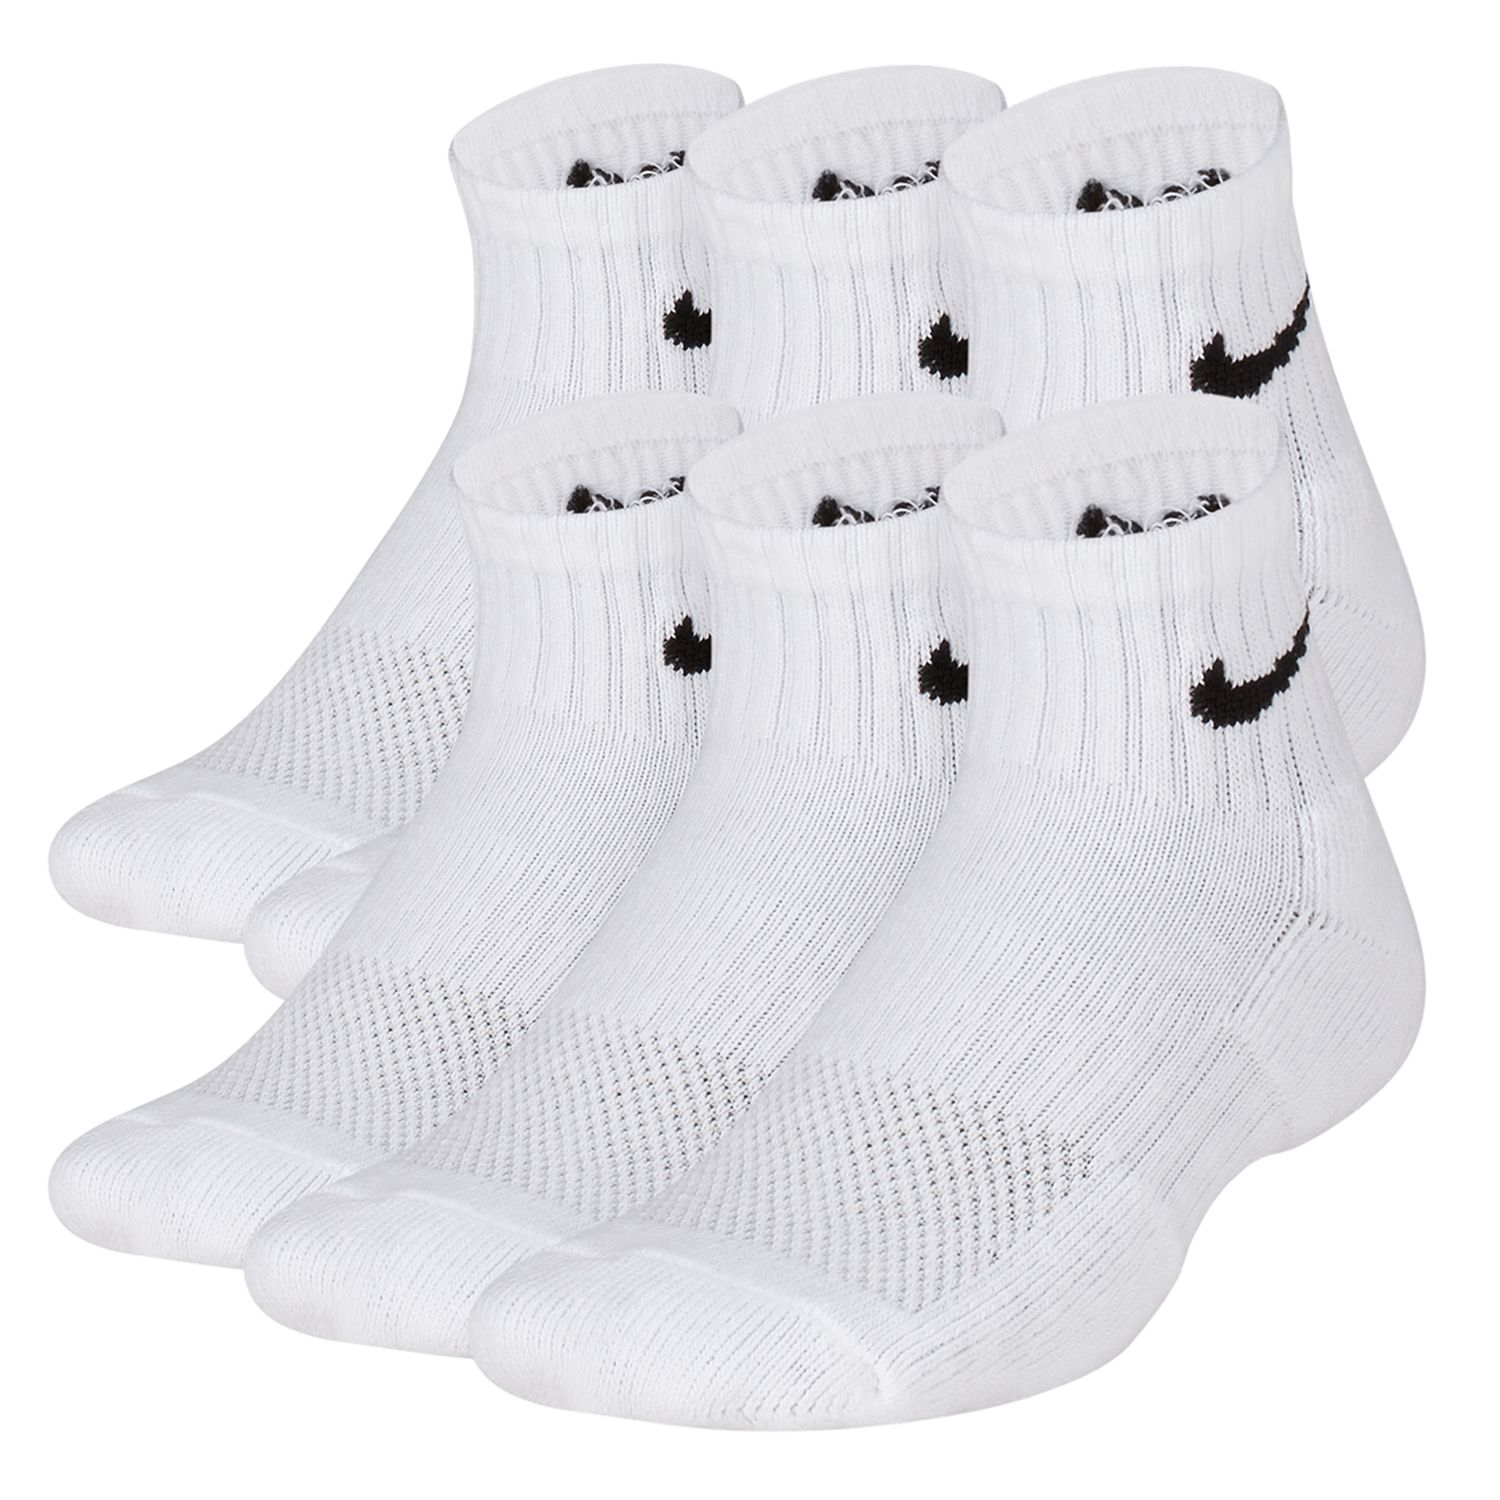 nike boys socks size chart